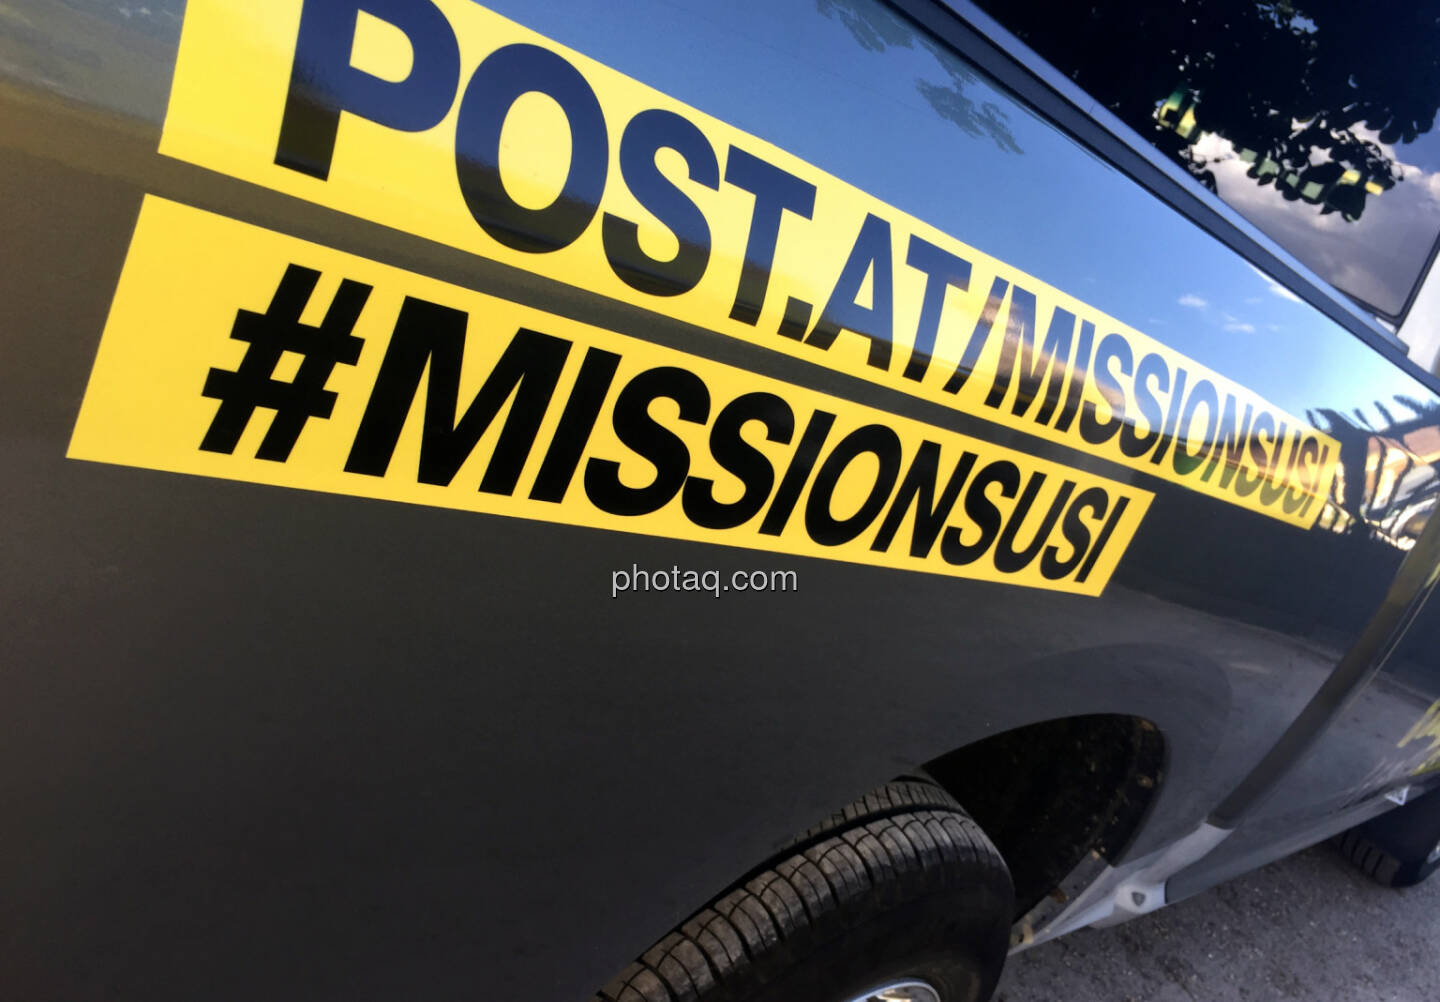 Mission Susi Österreichische Post #missionsusi